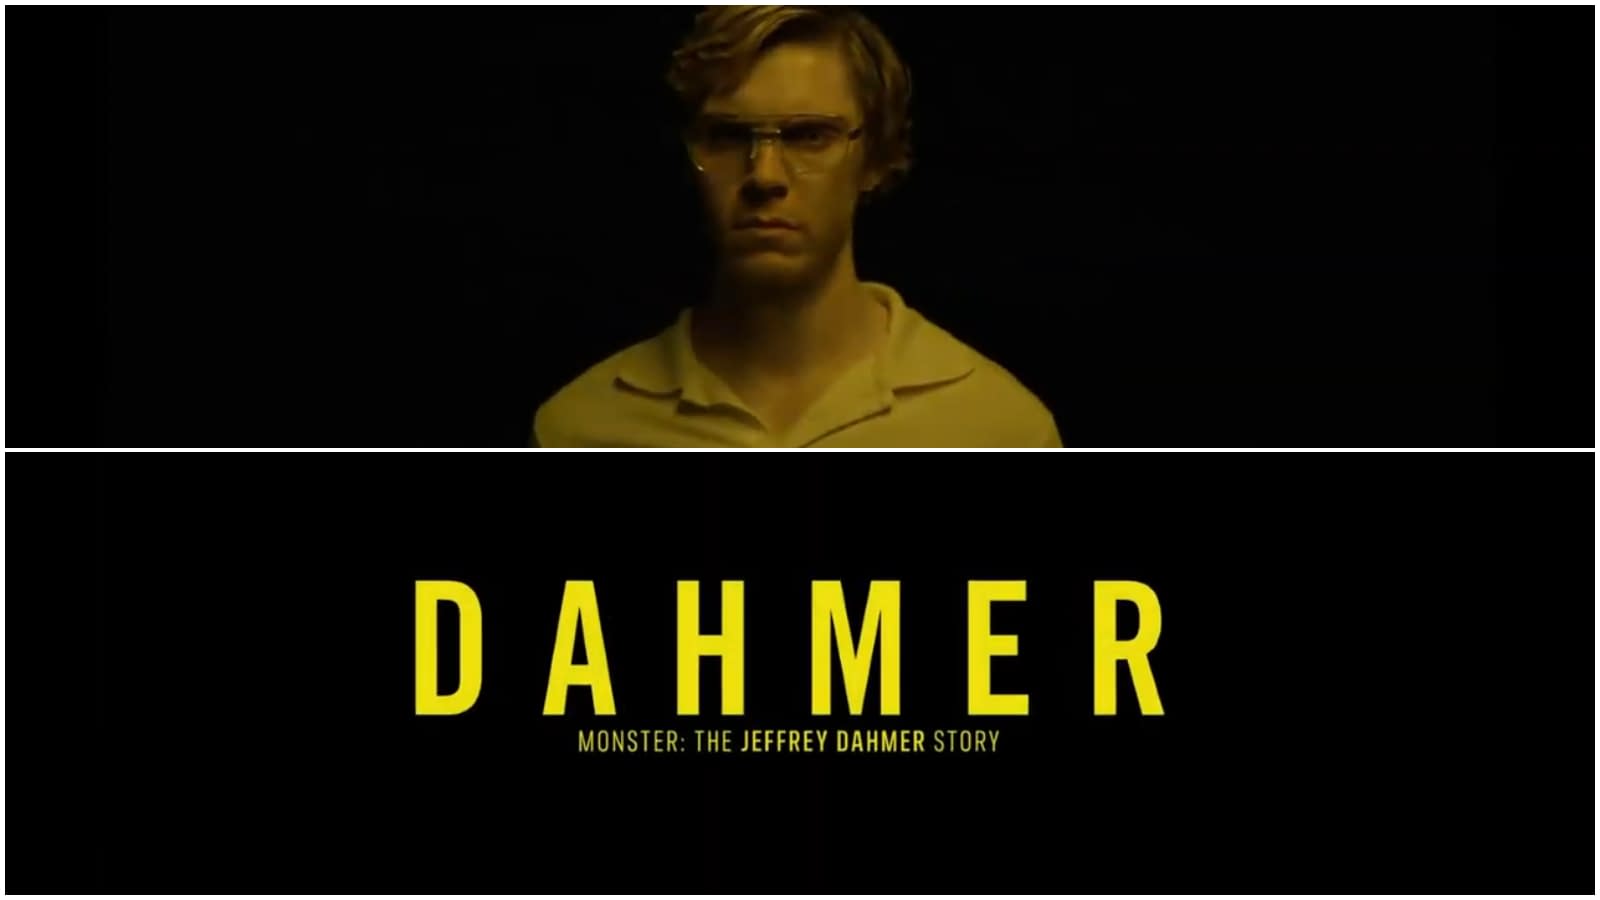 Jeffrey Dahmer Series 'Monster' Is Netflix's Ninth Most Popular Series